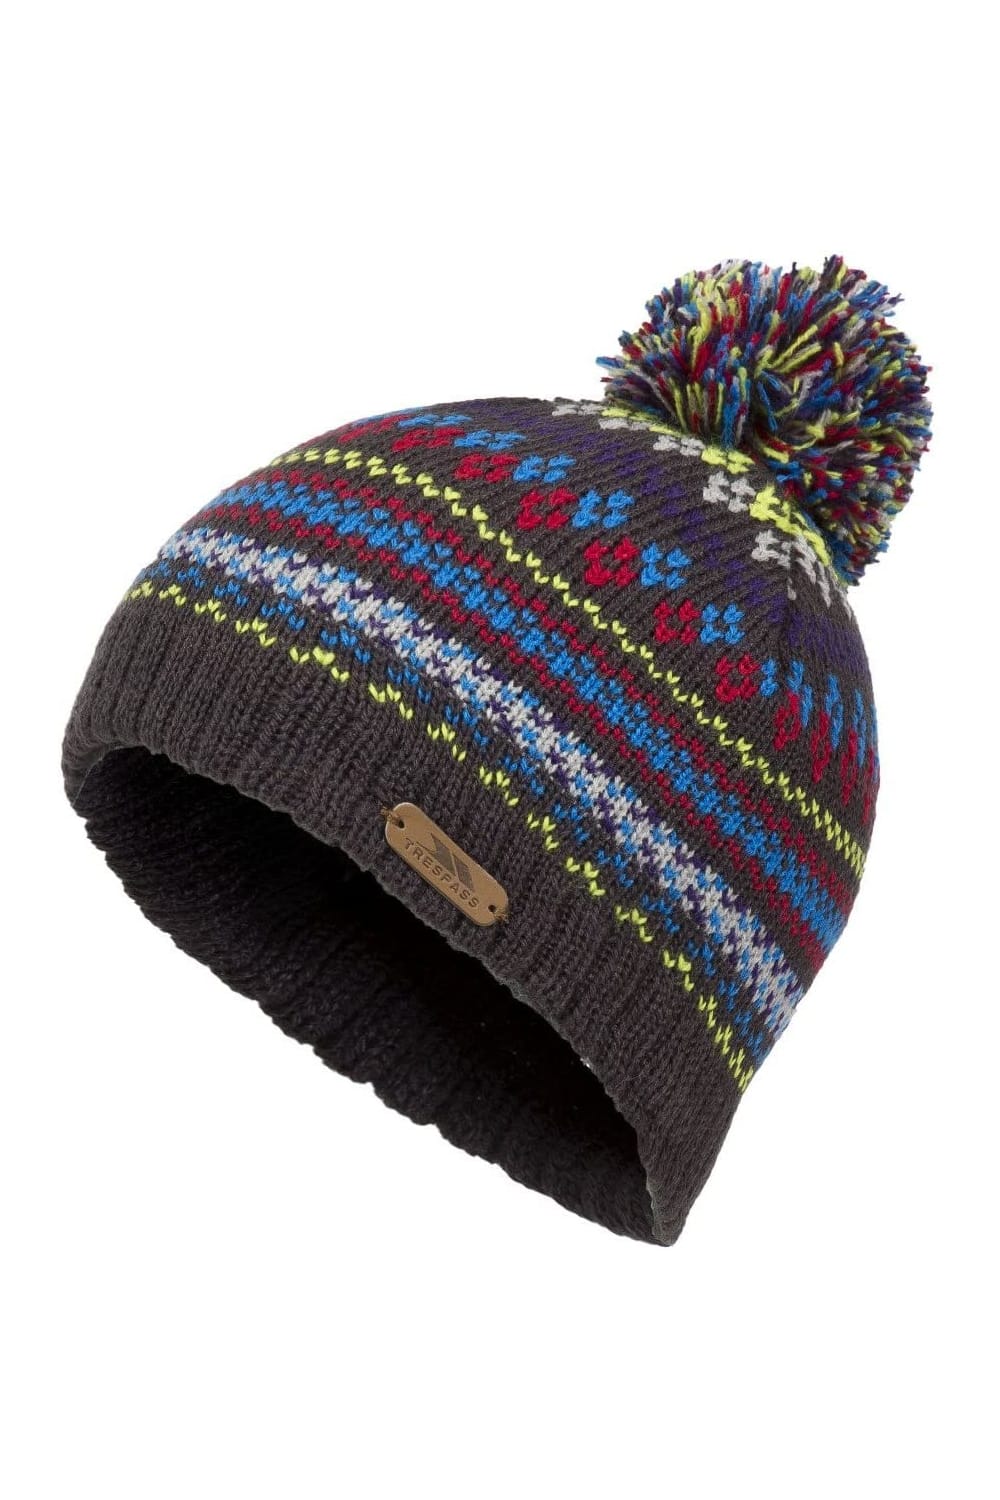 Trespass Childrens/Kids Garrity Winter Hat (Multicolored)